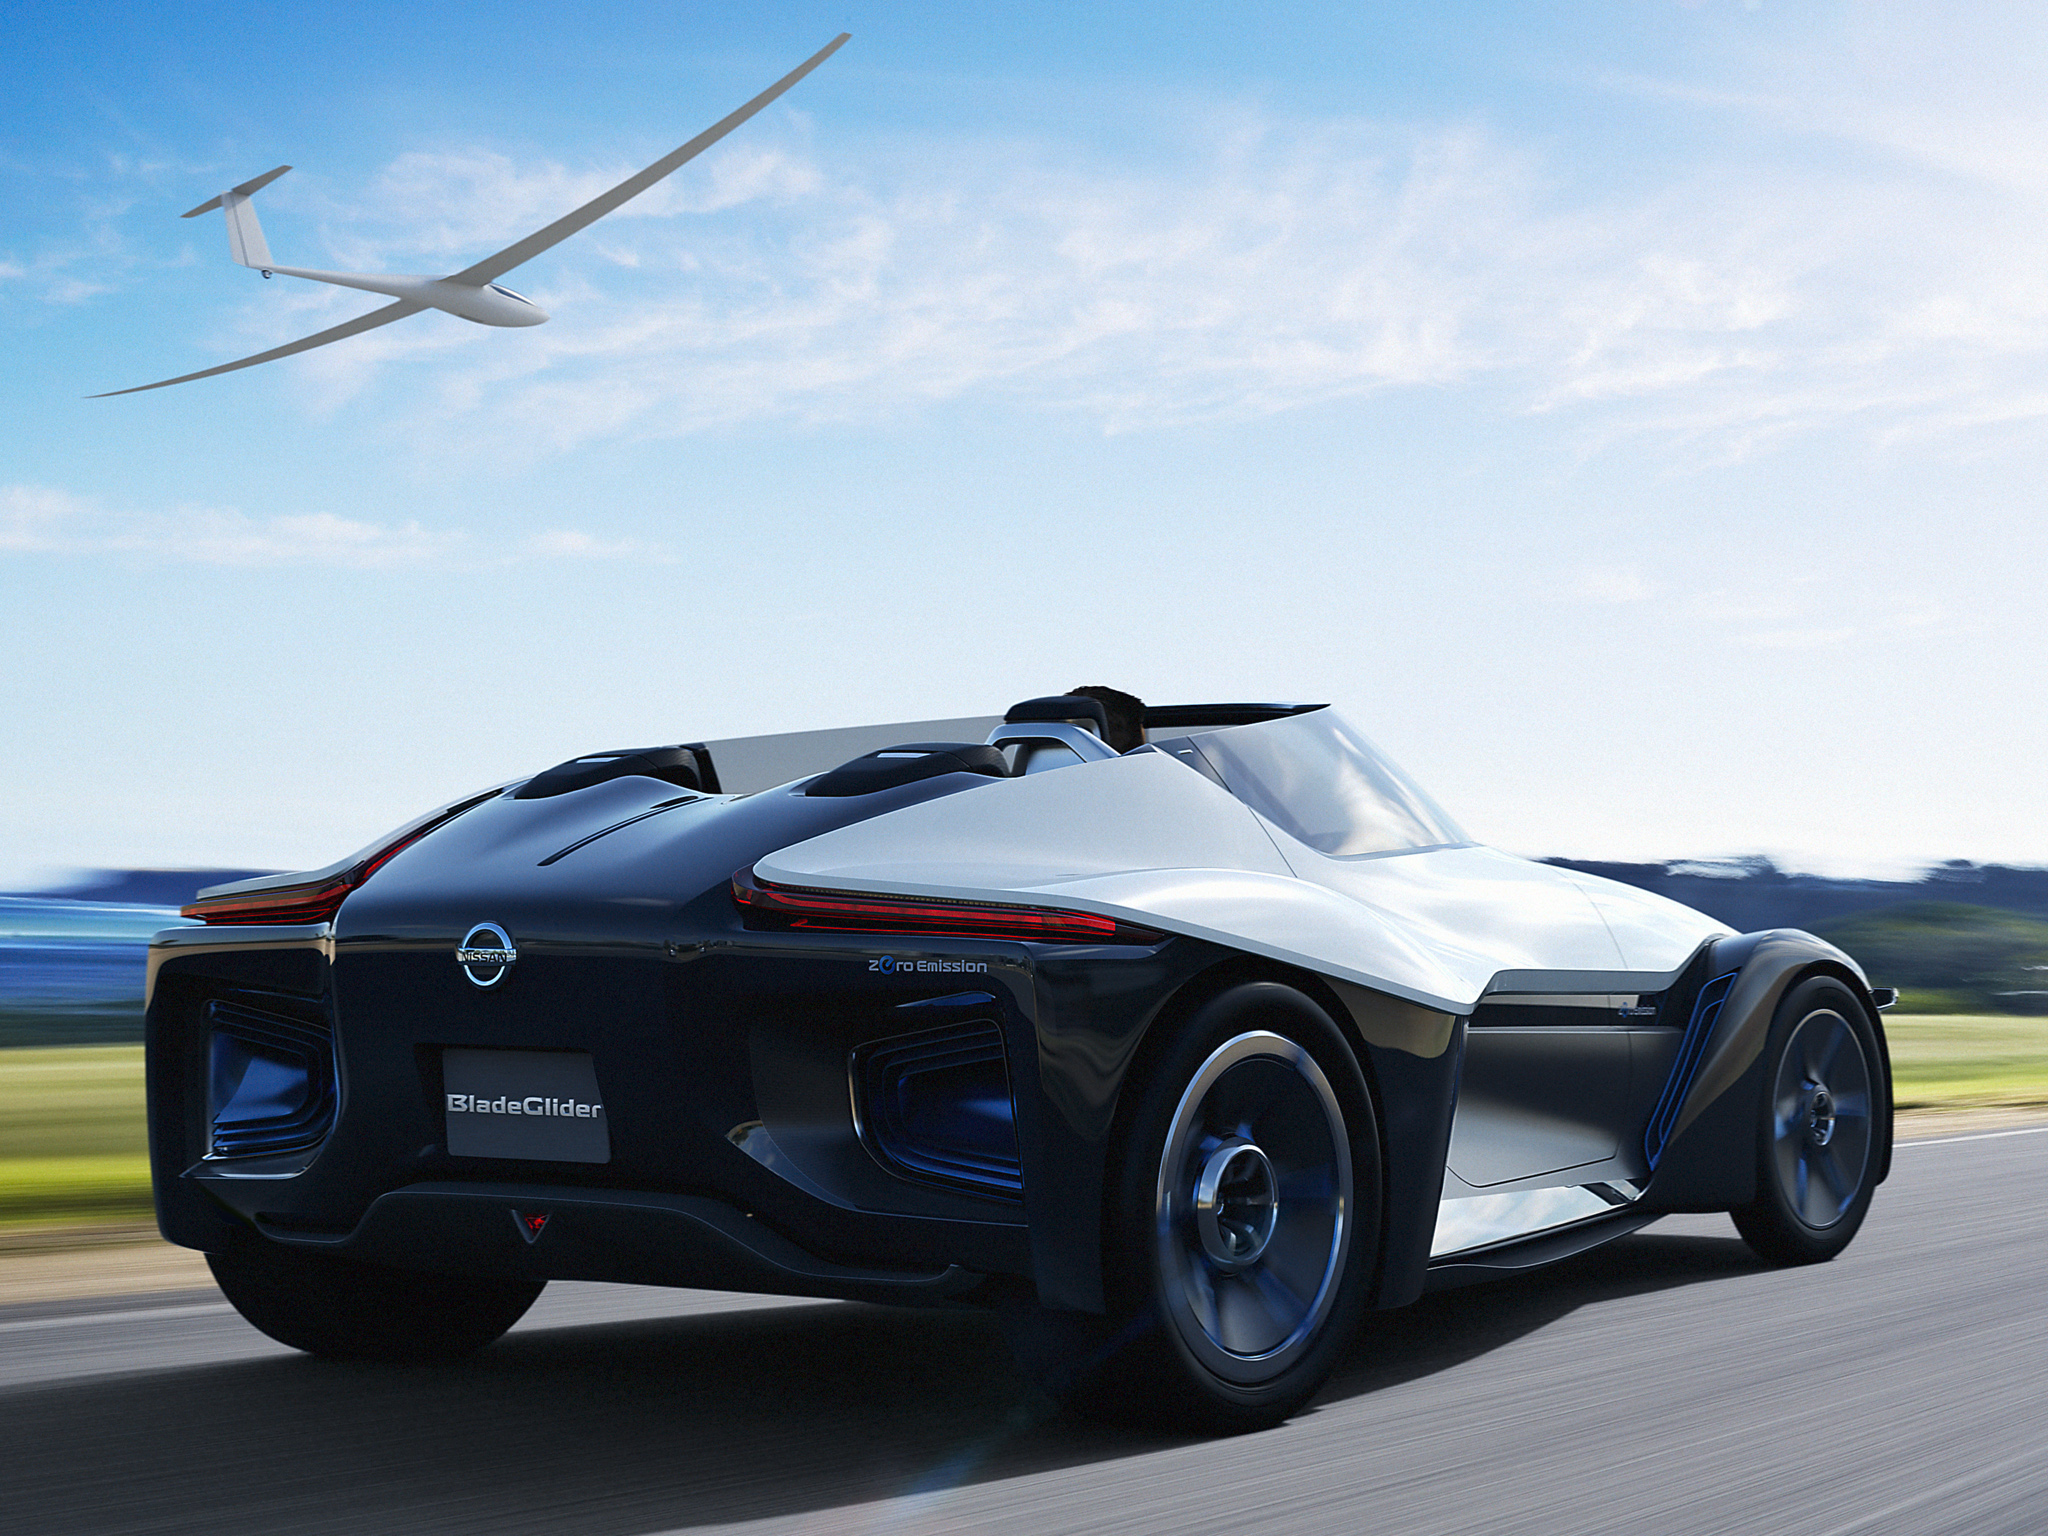 2013, Nissan, Bladeglider, Concept, Supercar, Ge Wallpaper